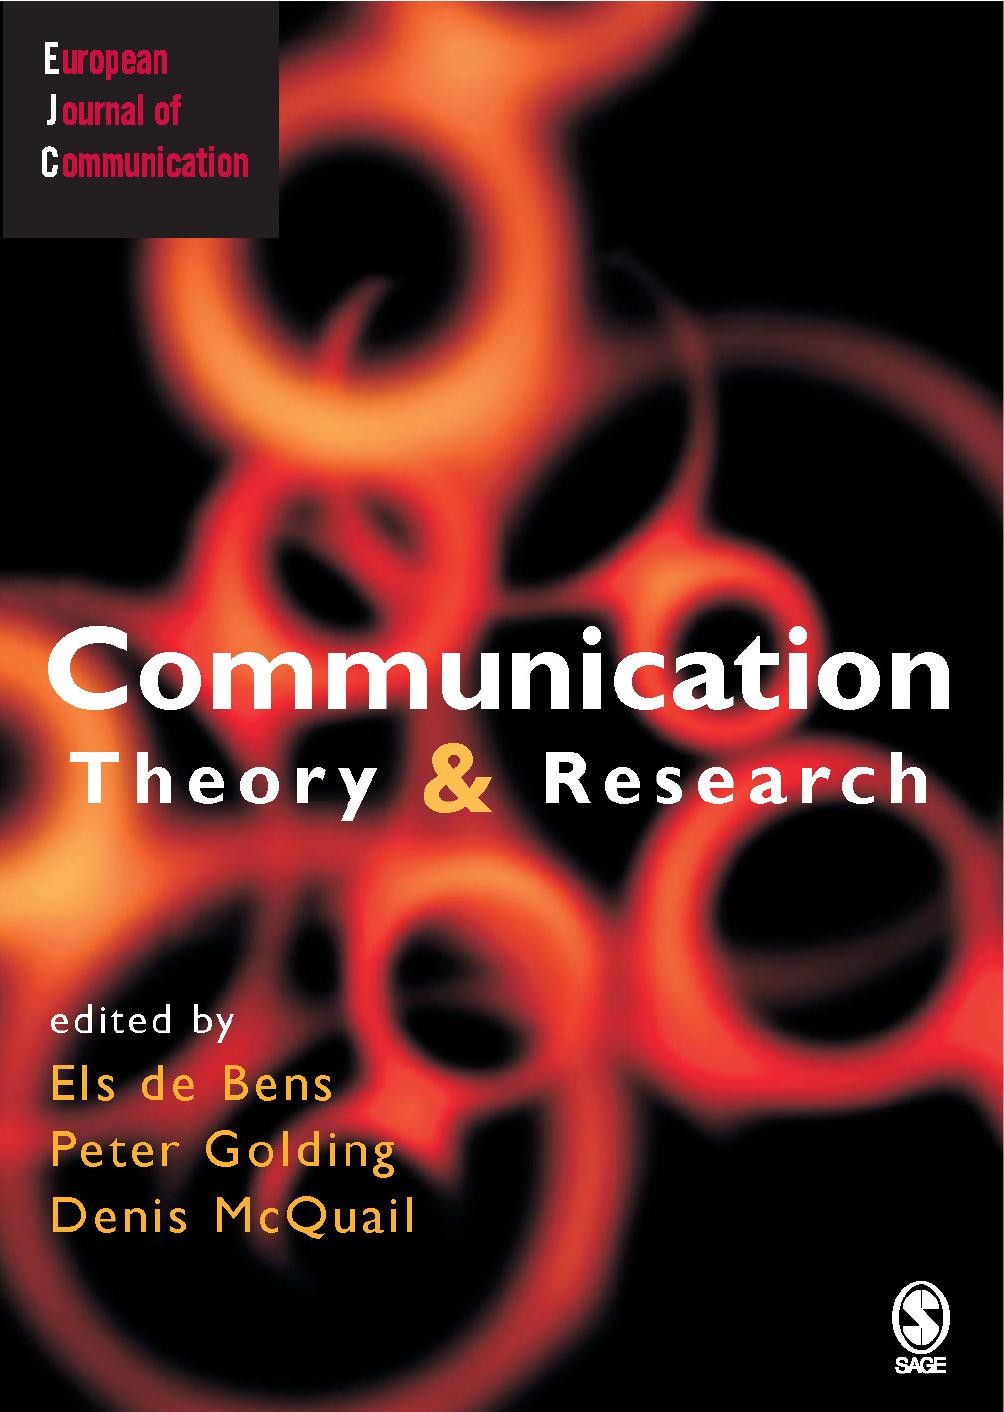 Communication Theory & Research 2005